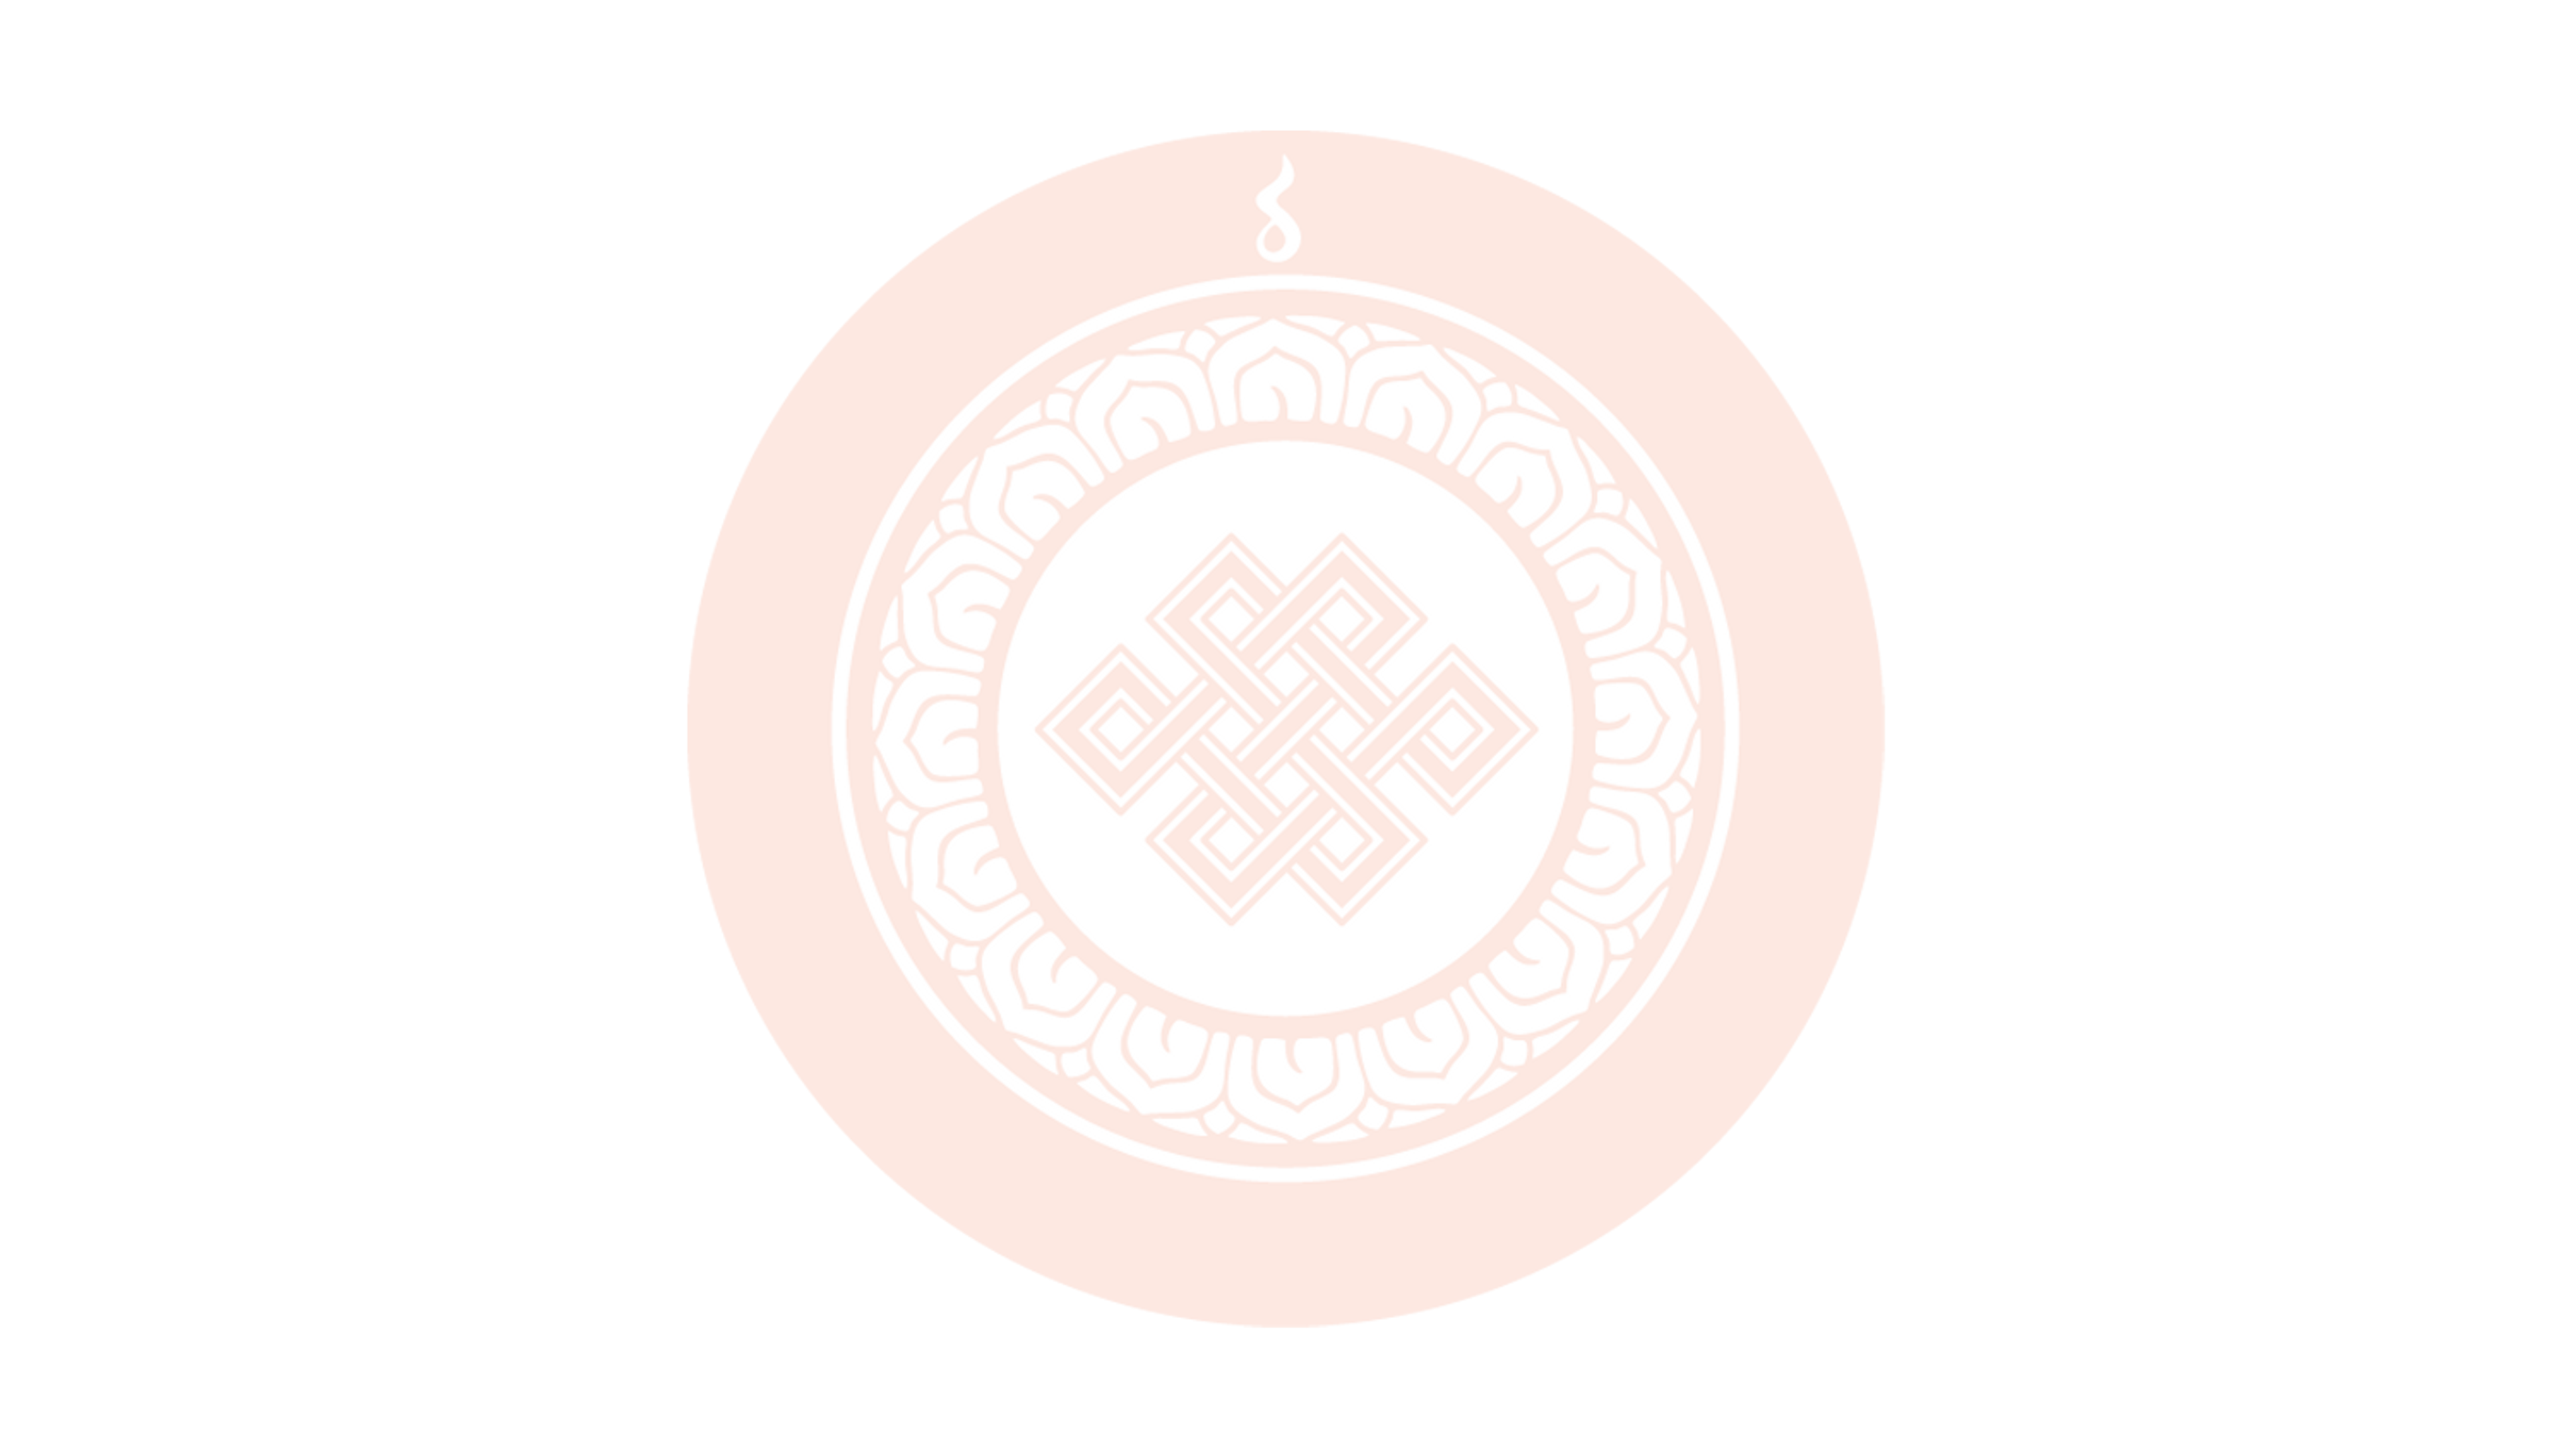 Eternal Knot is incorporated into Karmê Chöling's symbol